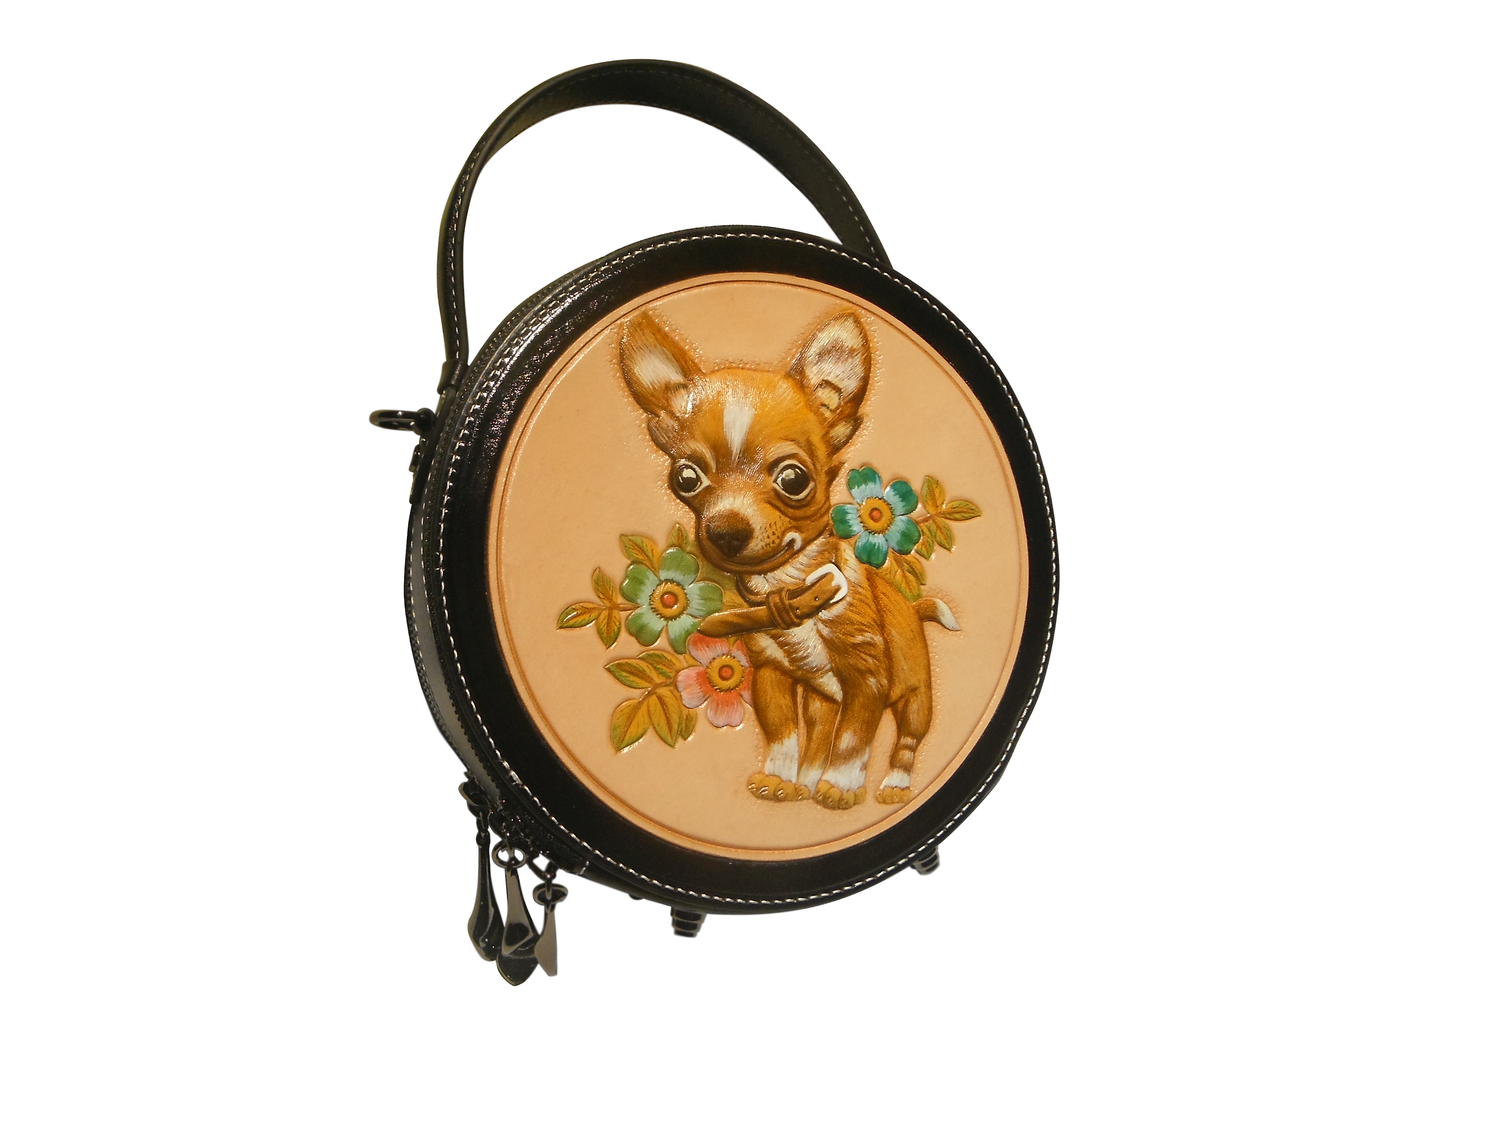 <p>Carved Leather Handbag with Dog Design</p>